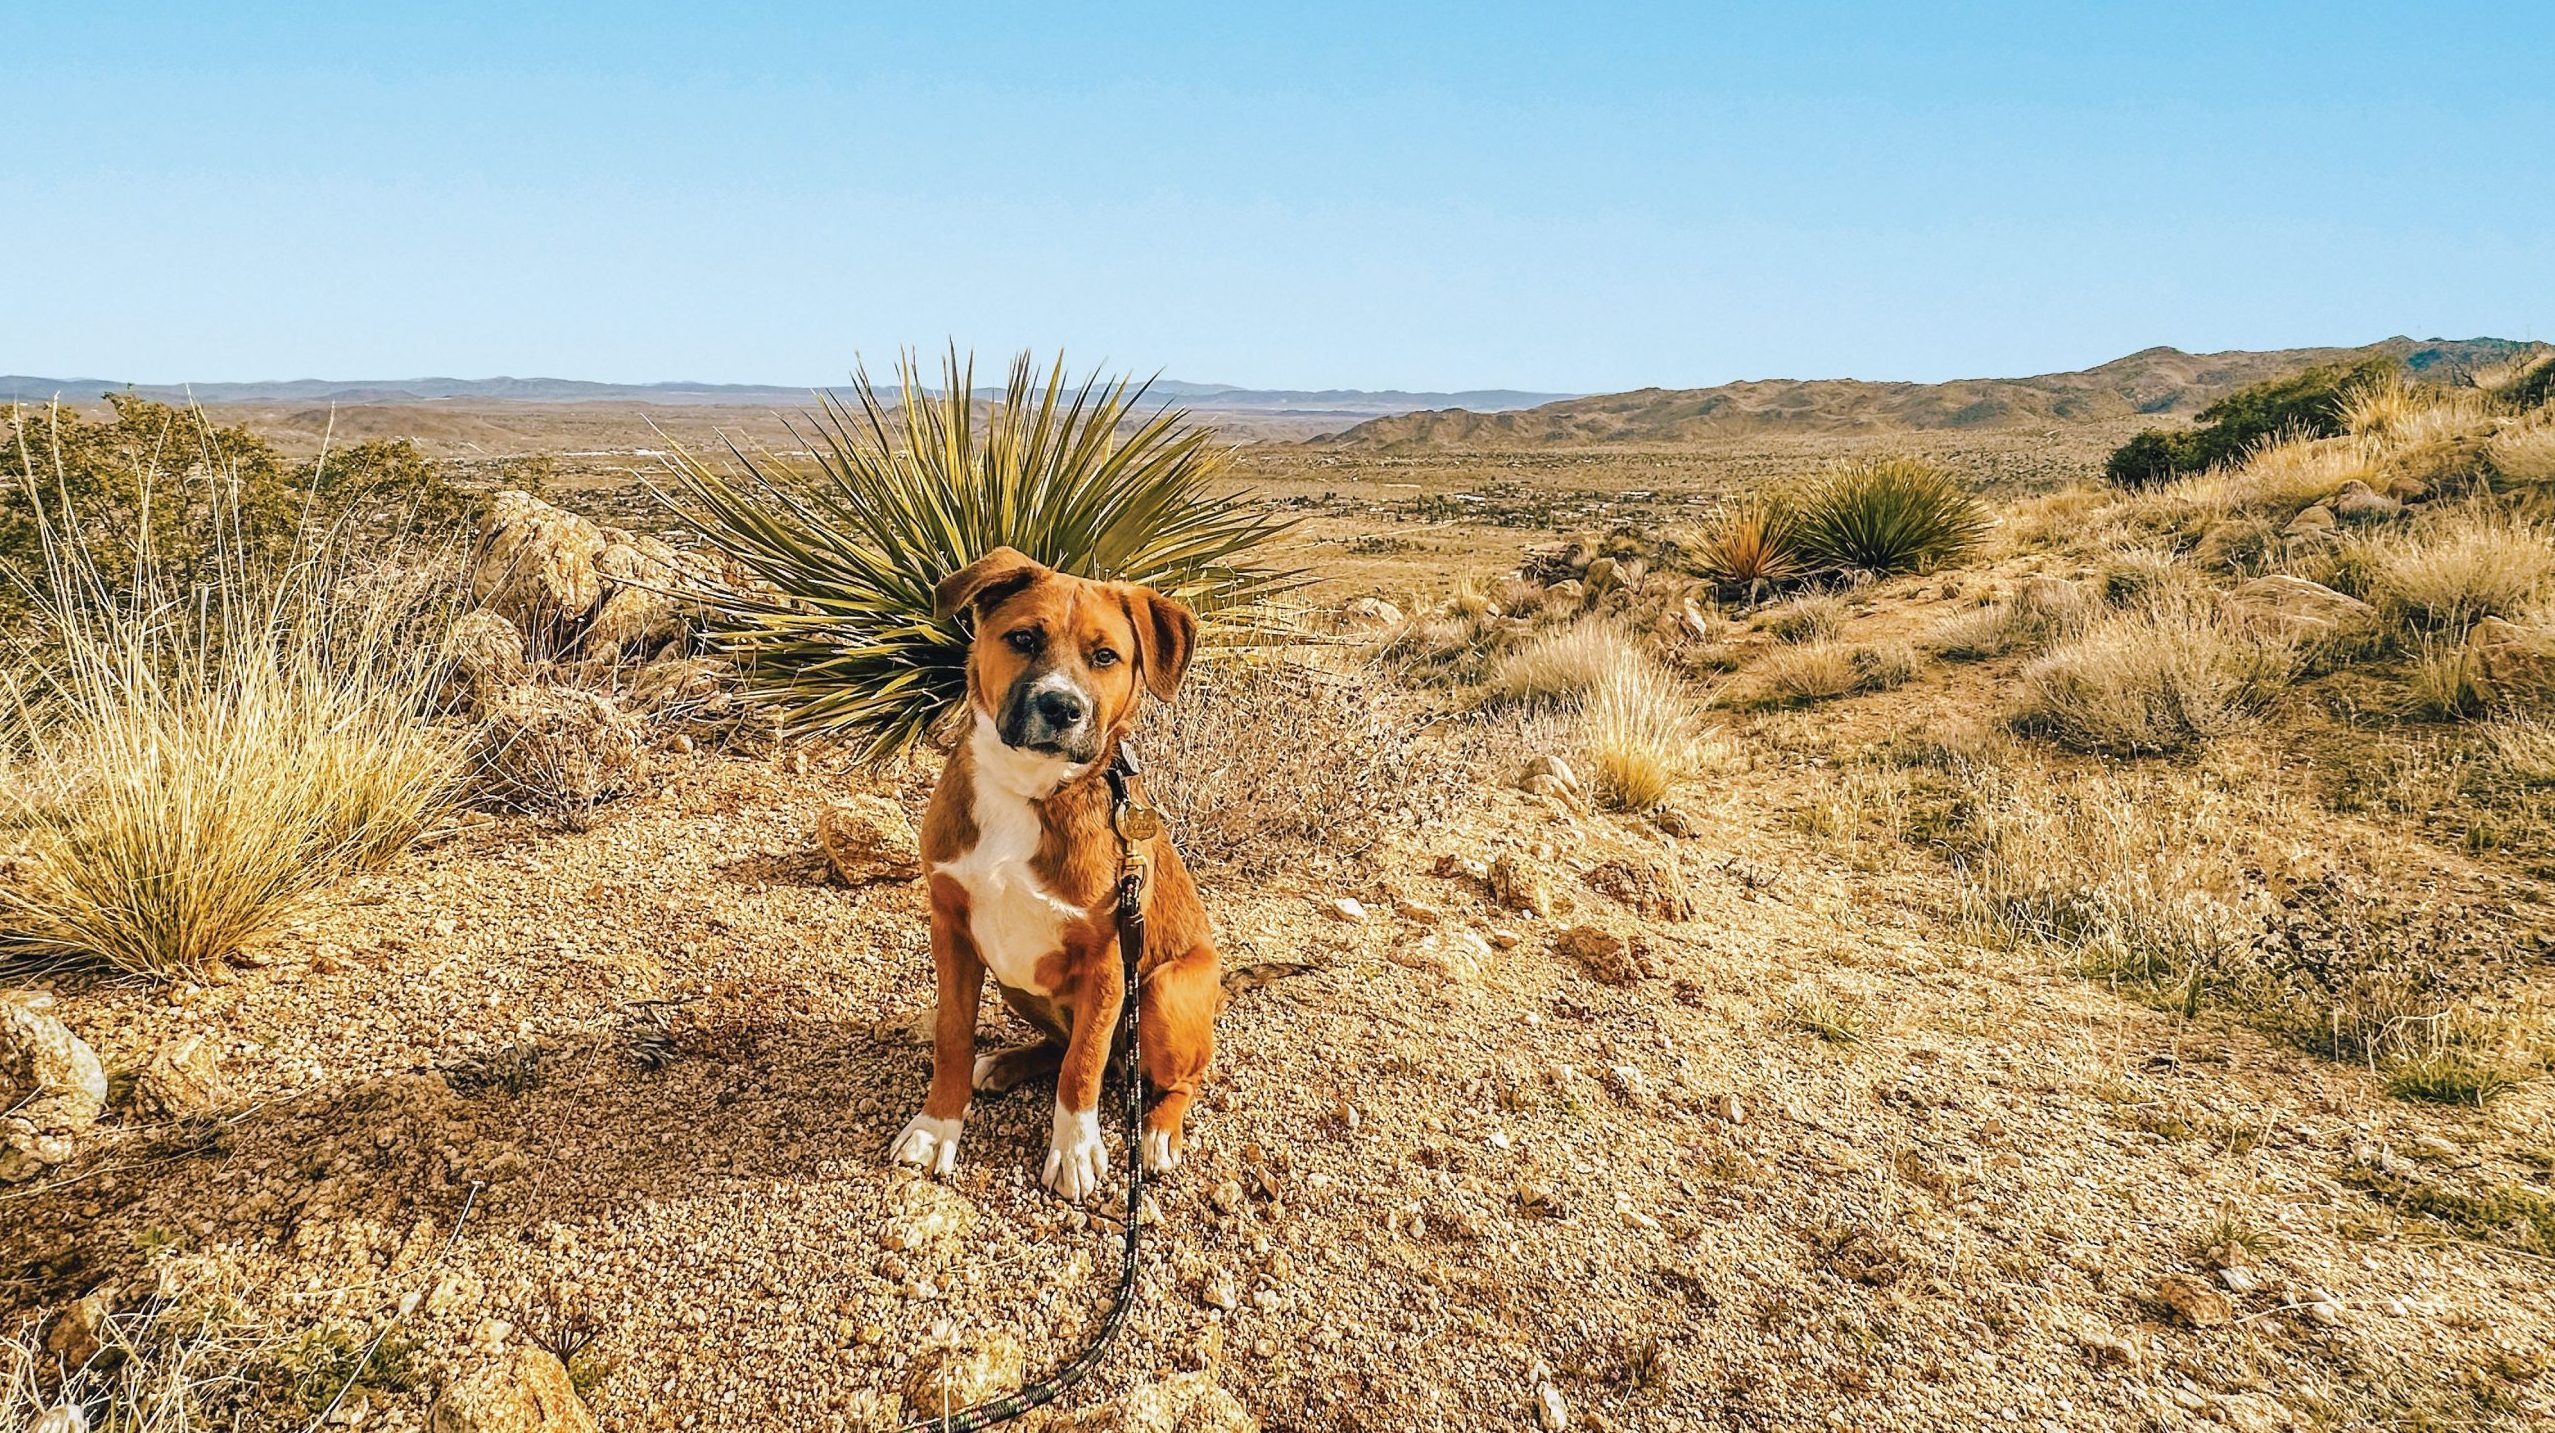 Maggie dog in the desert.